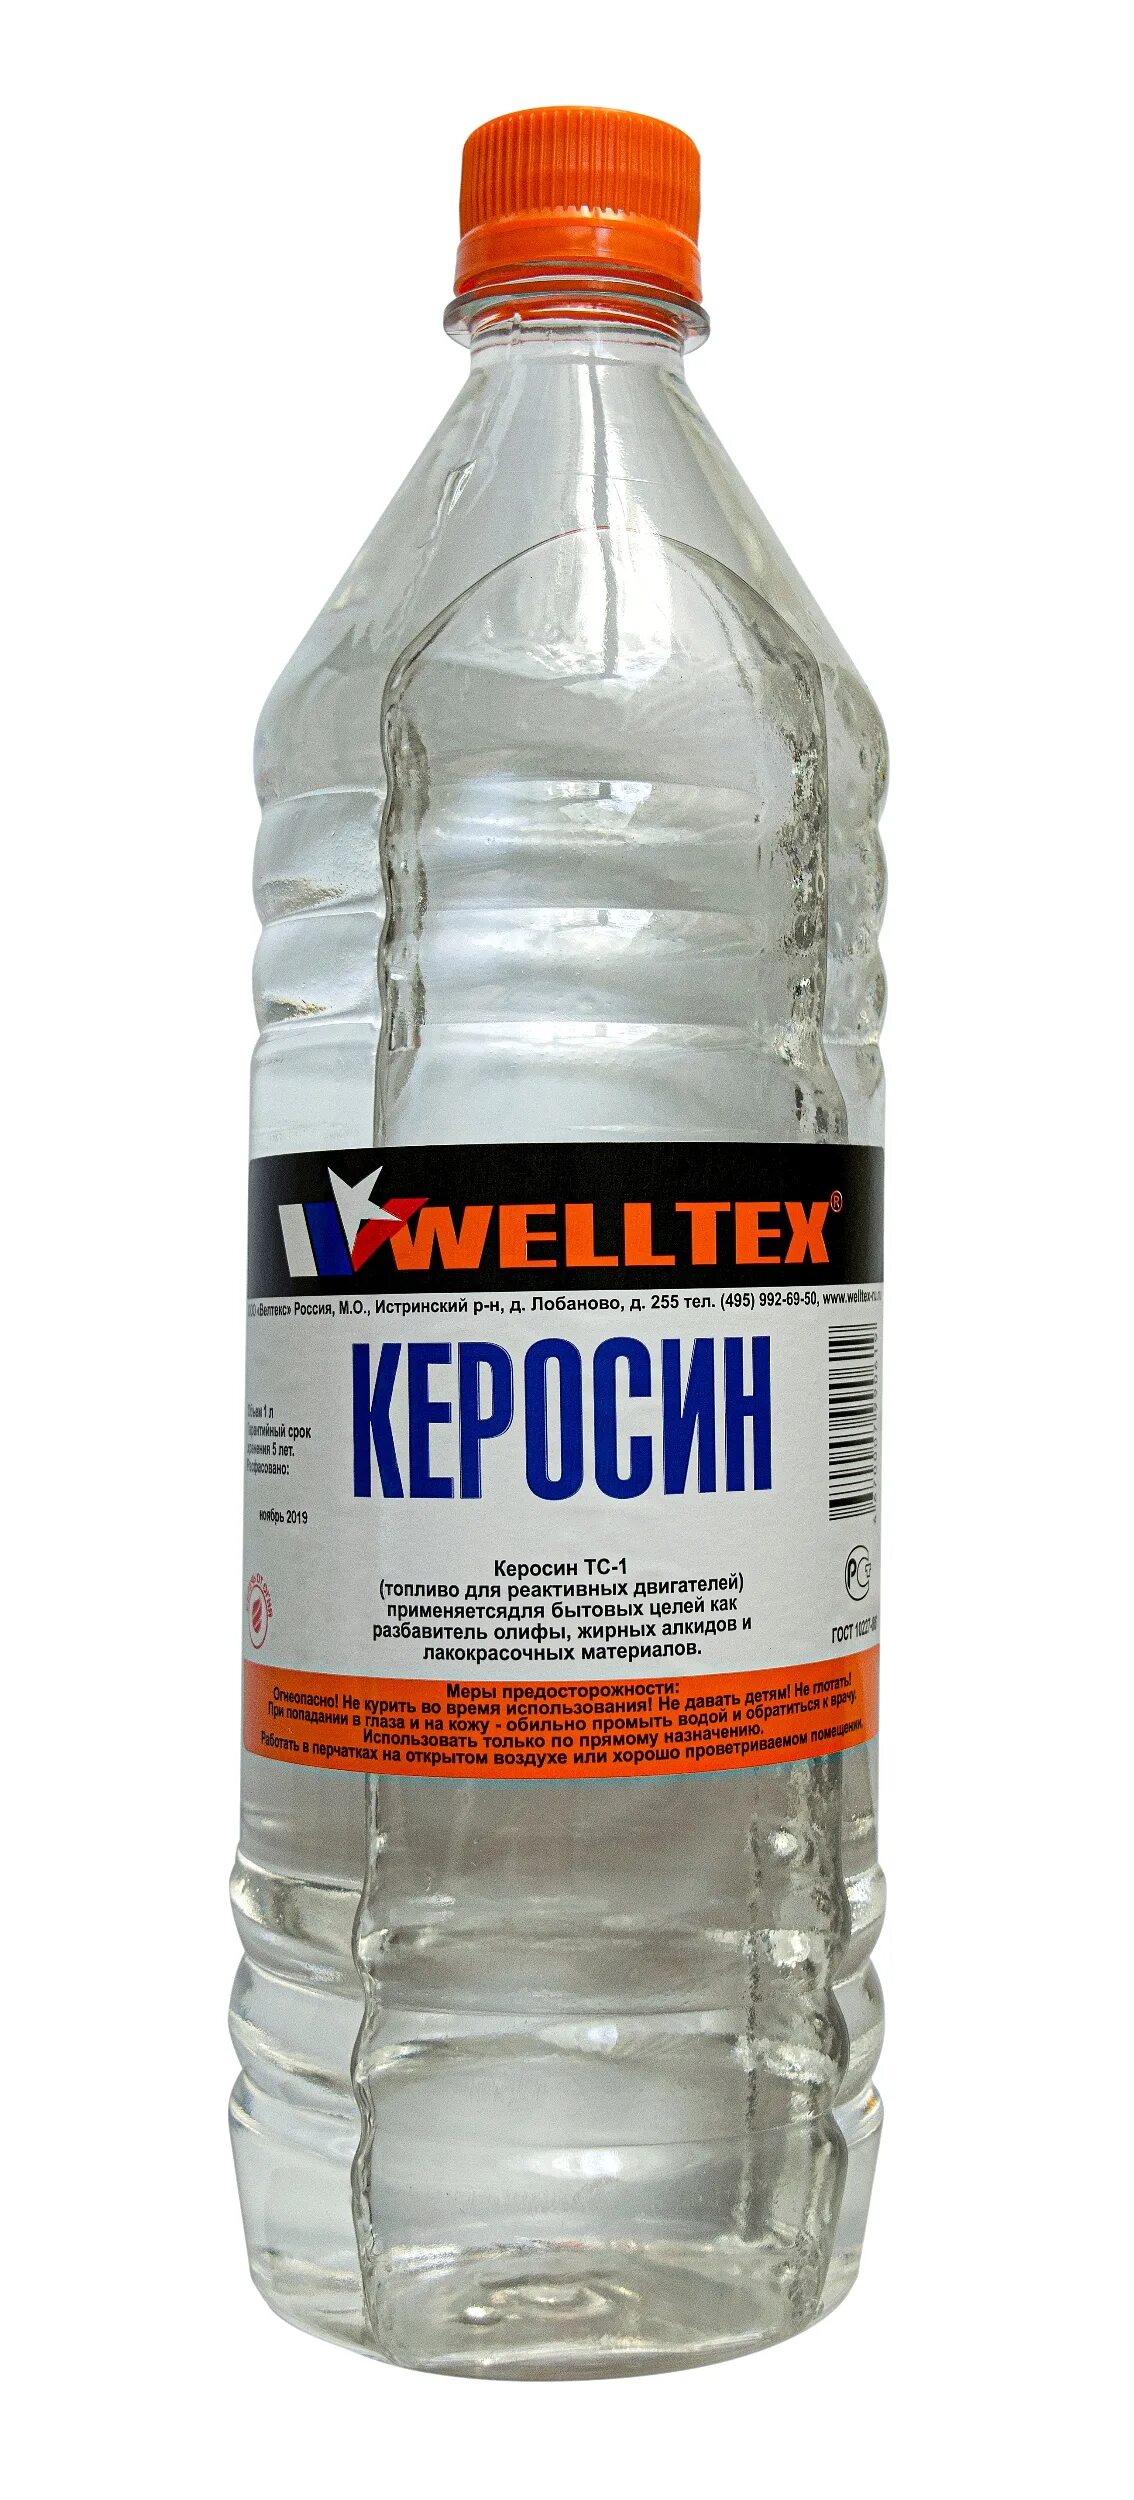 Welltex керосин (1л.). Керосин 1л Welltex Welltex 4670007990619. Сольвент Welltex нефтяной 1 л. Керосин ТС-1 ГОСТ. Керосин 5 литров